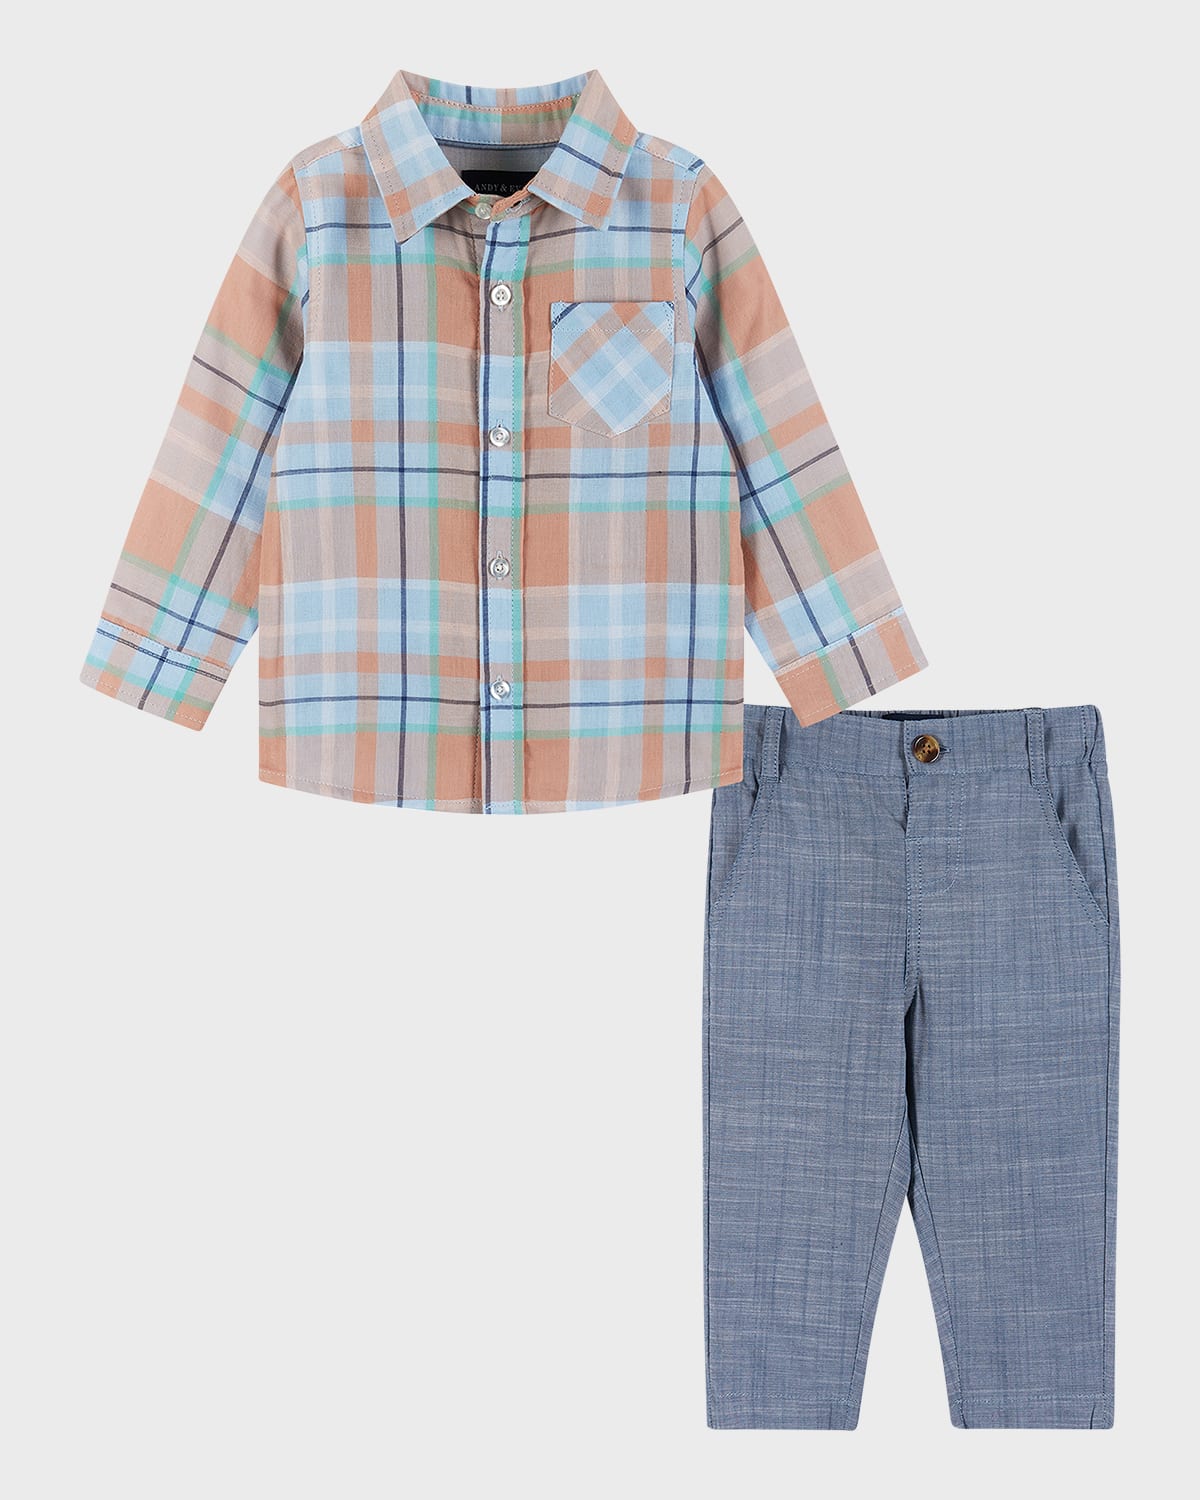 Andy & Evan Kids' Boy's Plaid Button Down Shirt W/ Bow Tie & Pants Set In Blue Plaid